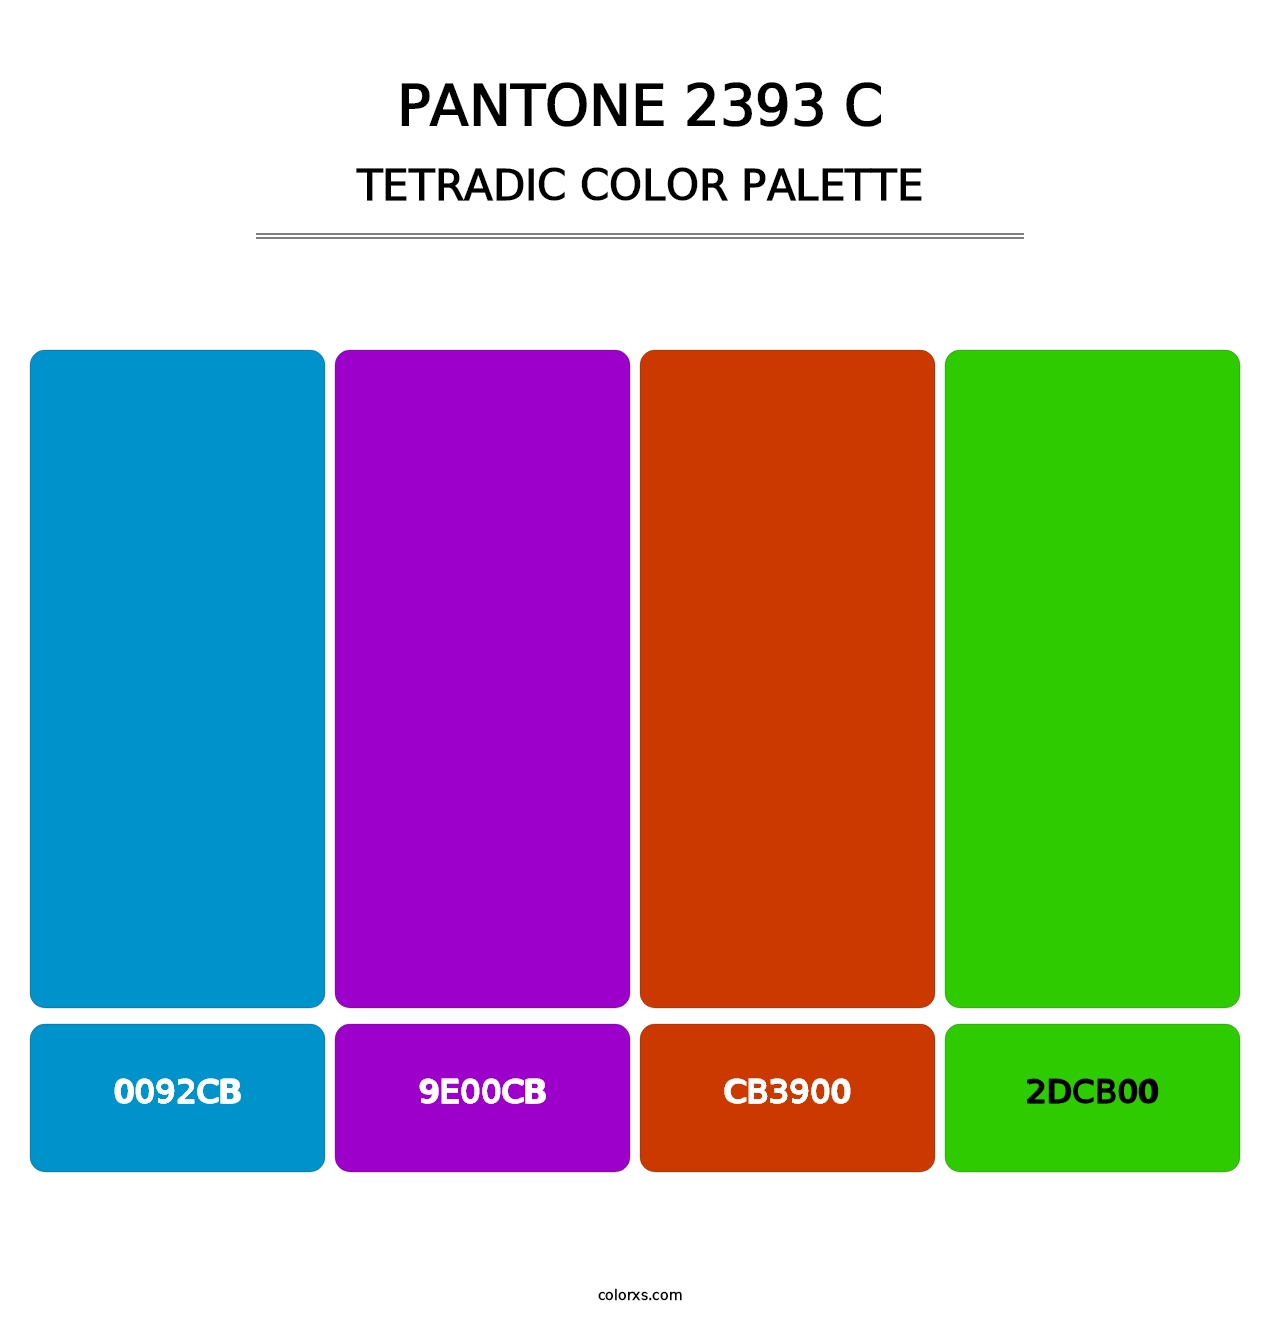 PANTONE 2393 C - Tetradic Color Palette